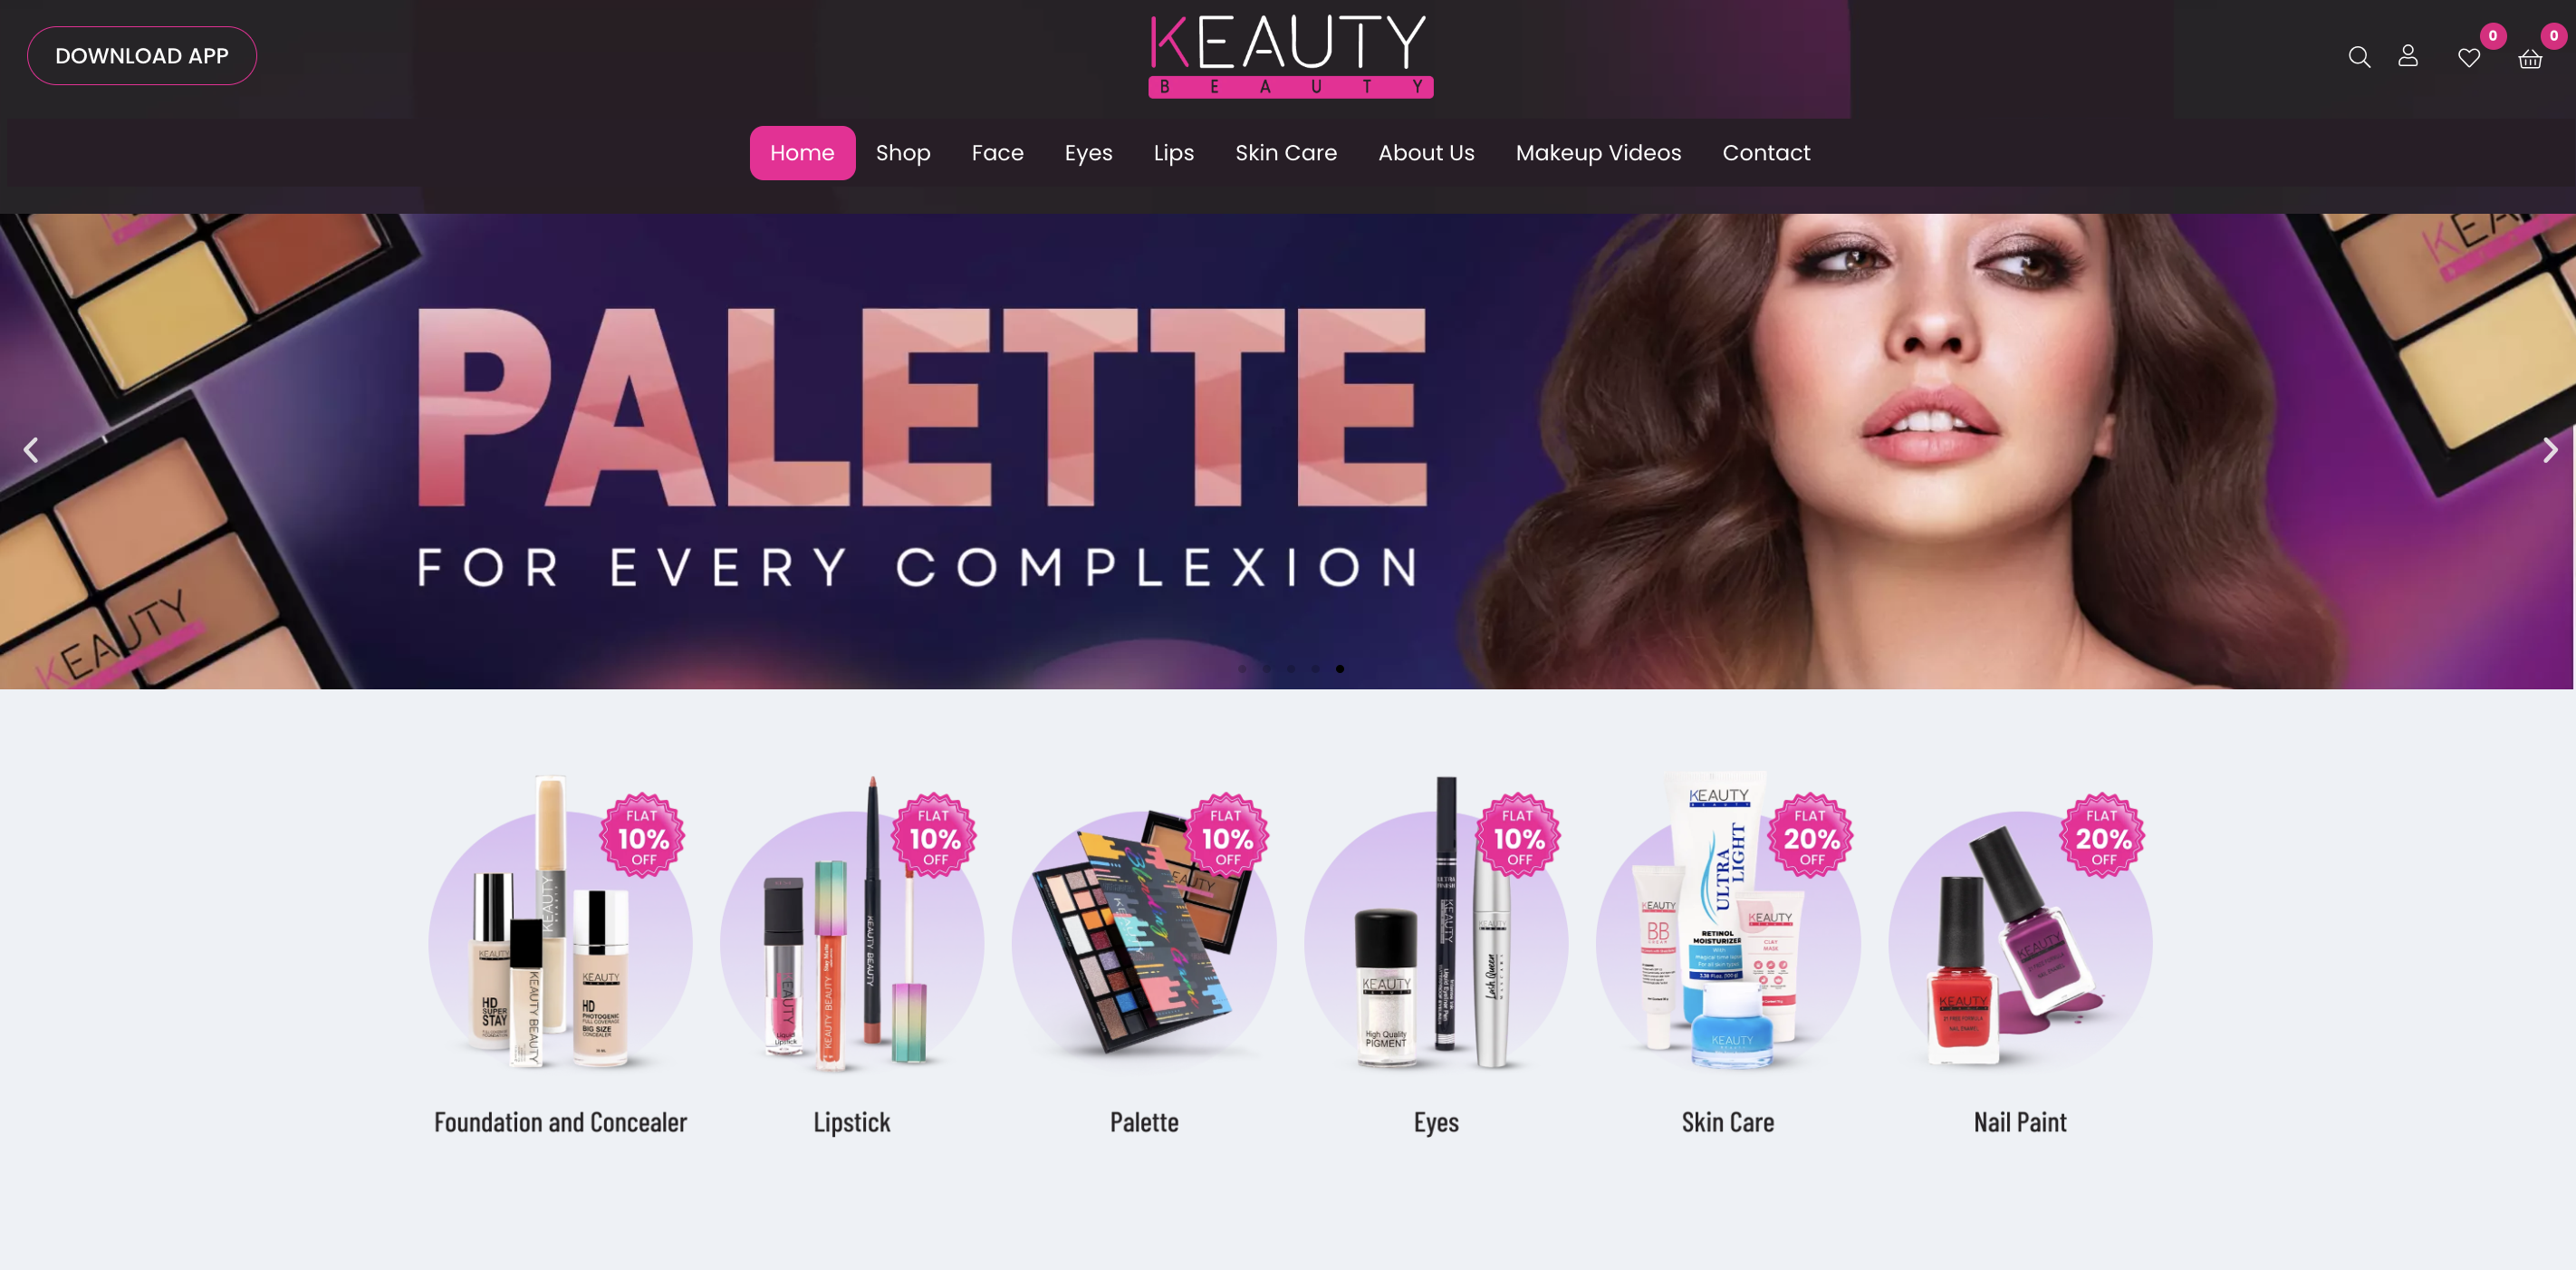 keauty Cosmetics and Beauty Products